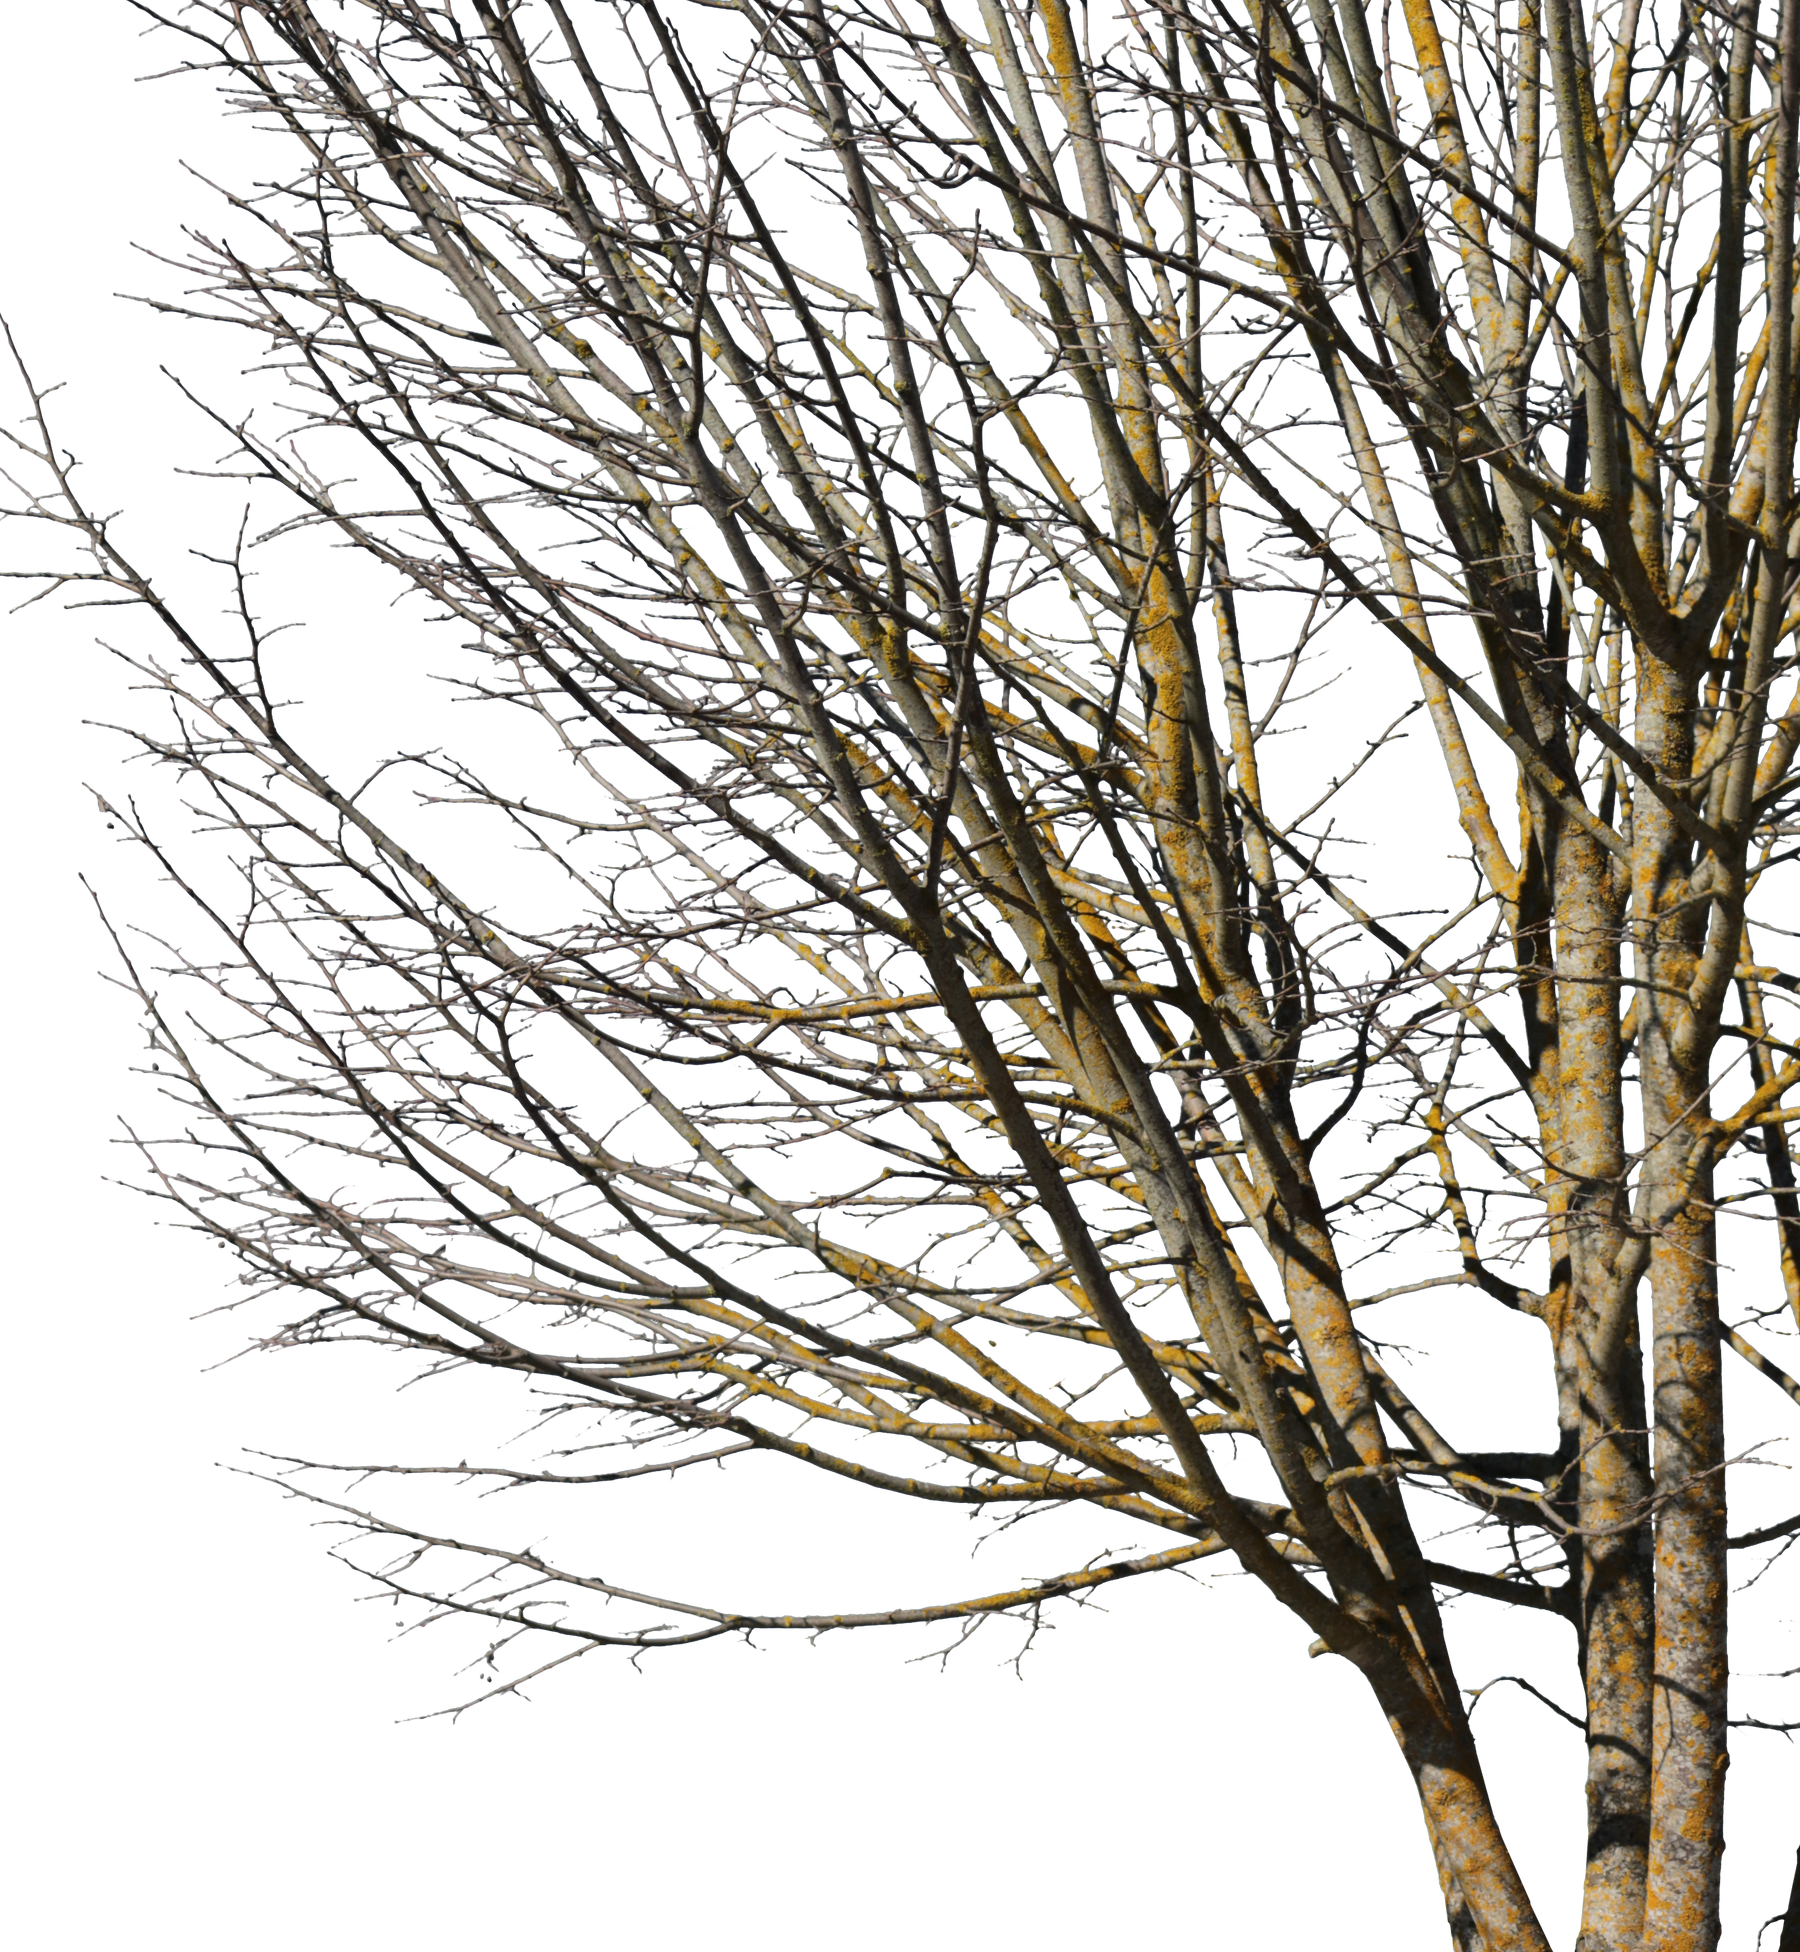 Deciduous Tree Winter VII - cutout trees